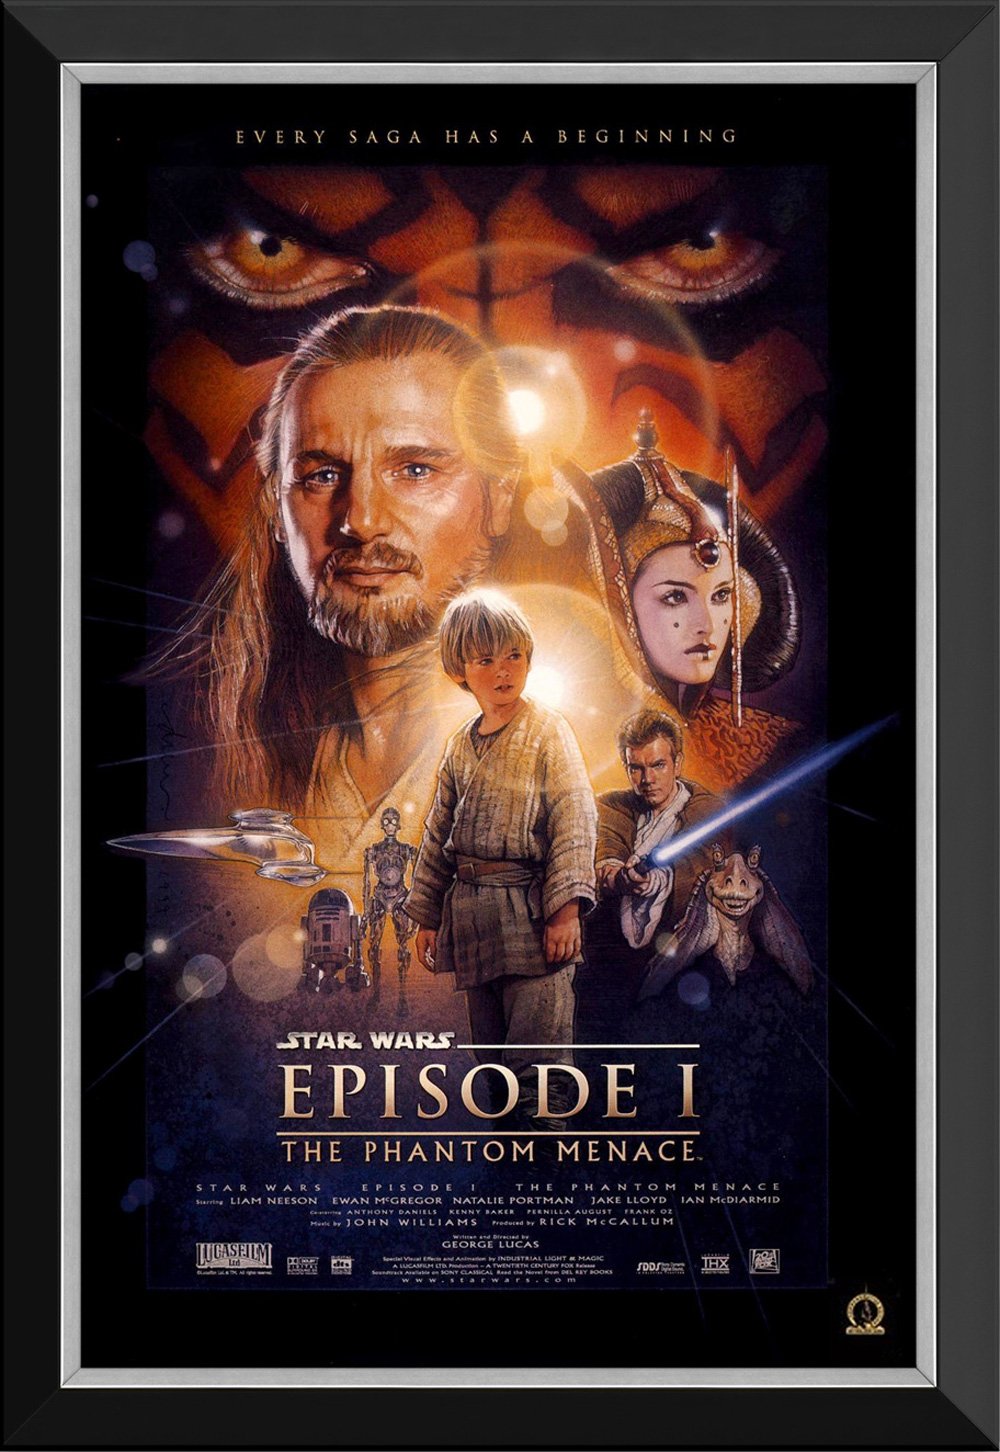 Star Wars Ep I The Phantom Menace - Movie Poster Reprint - Framed Classic